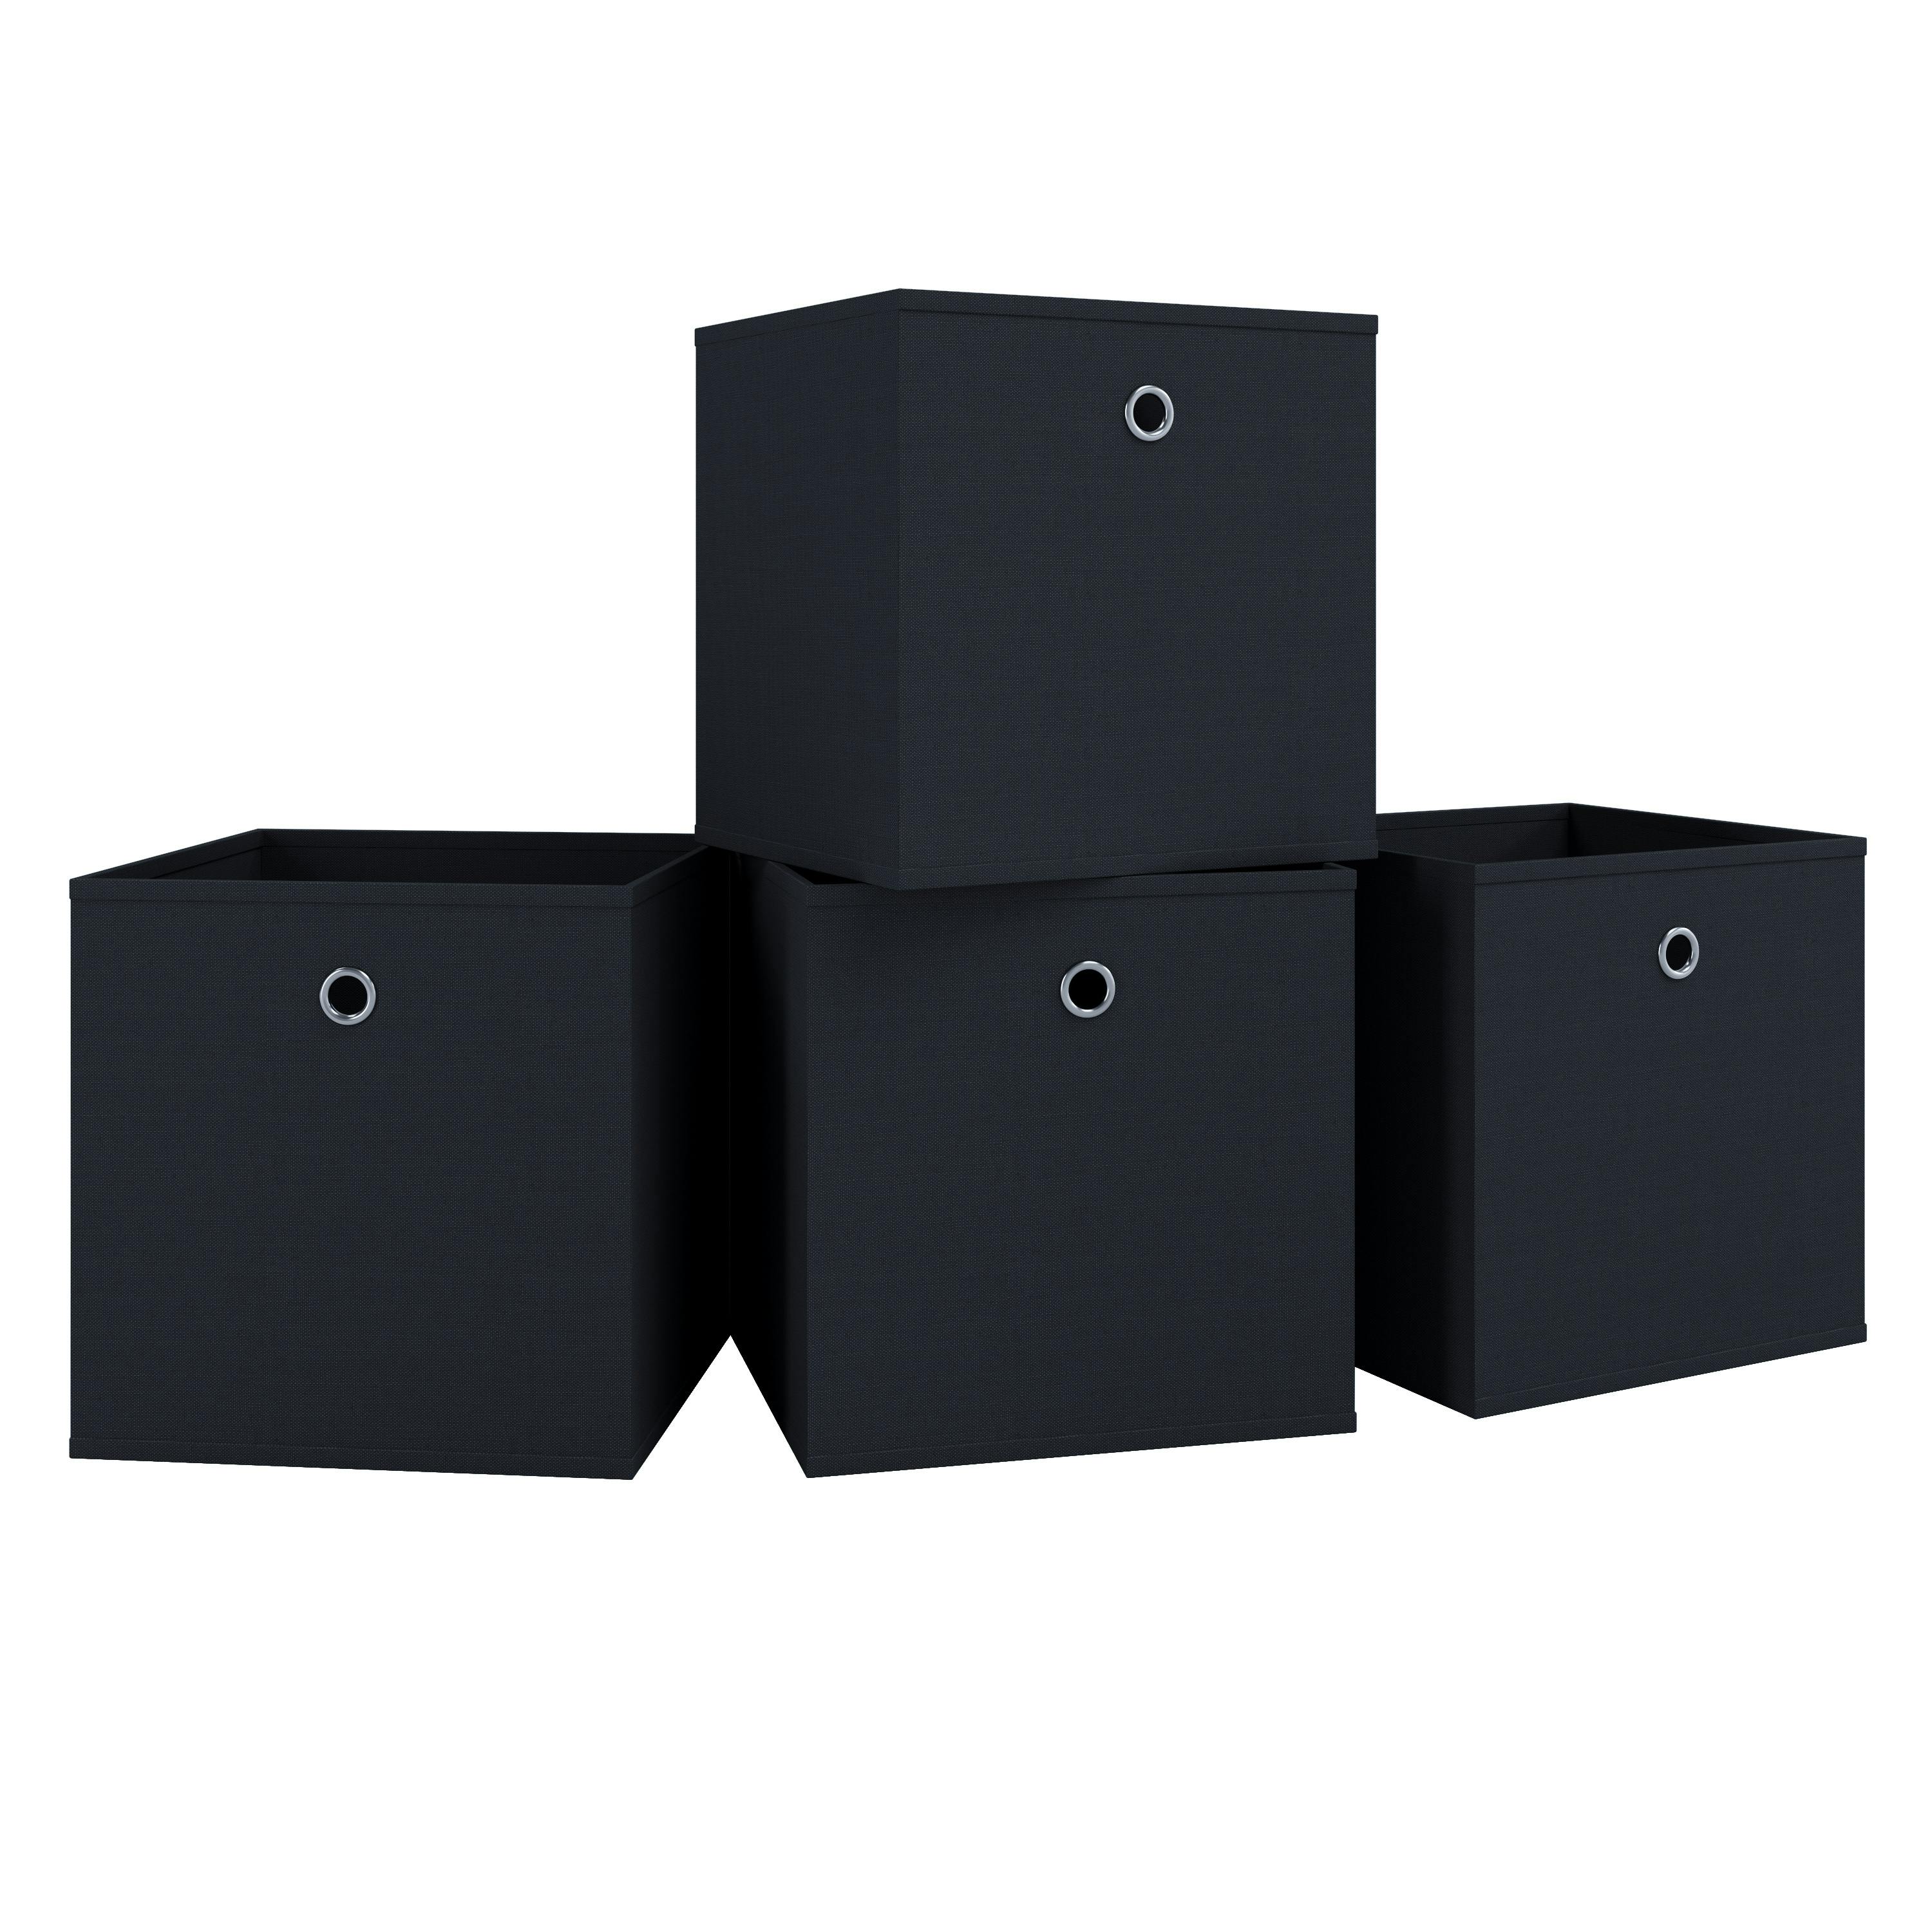 VCM VCM 6er-Set Faltbox Klappbox Boxas Farbe: Schwarz